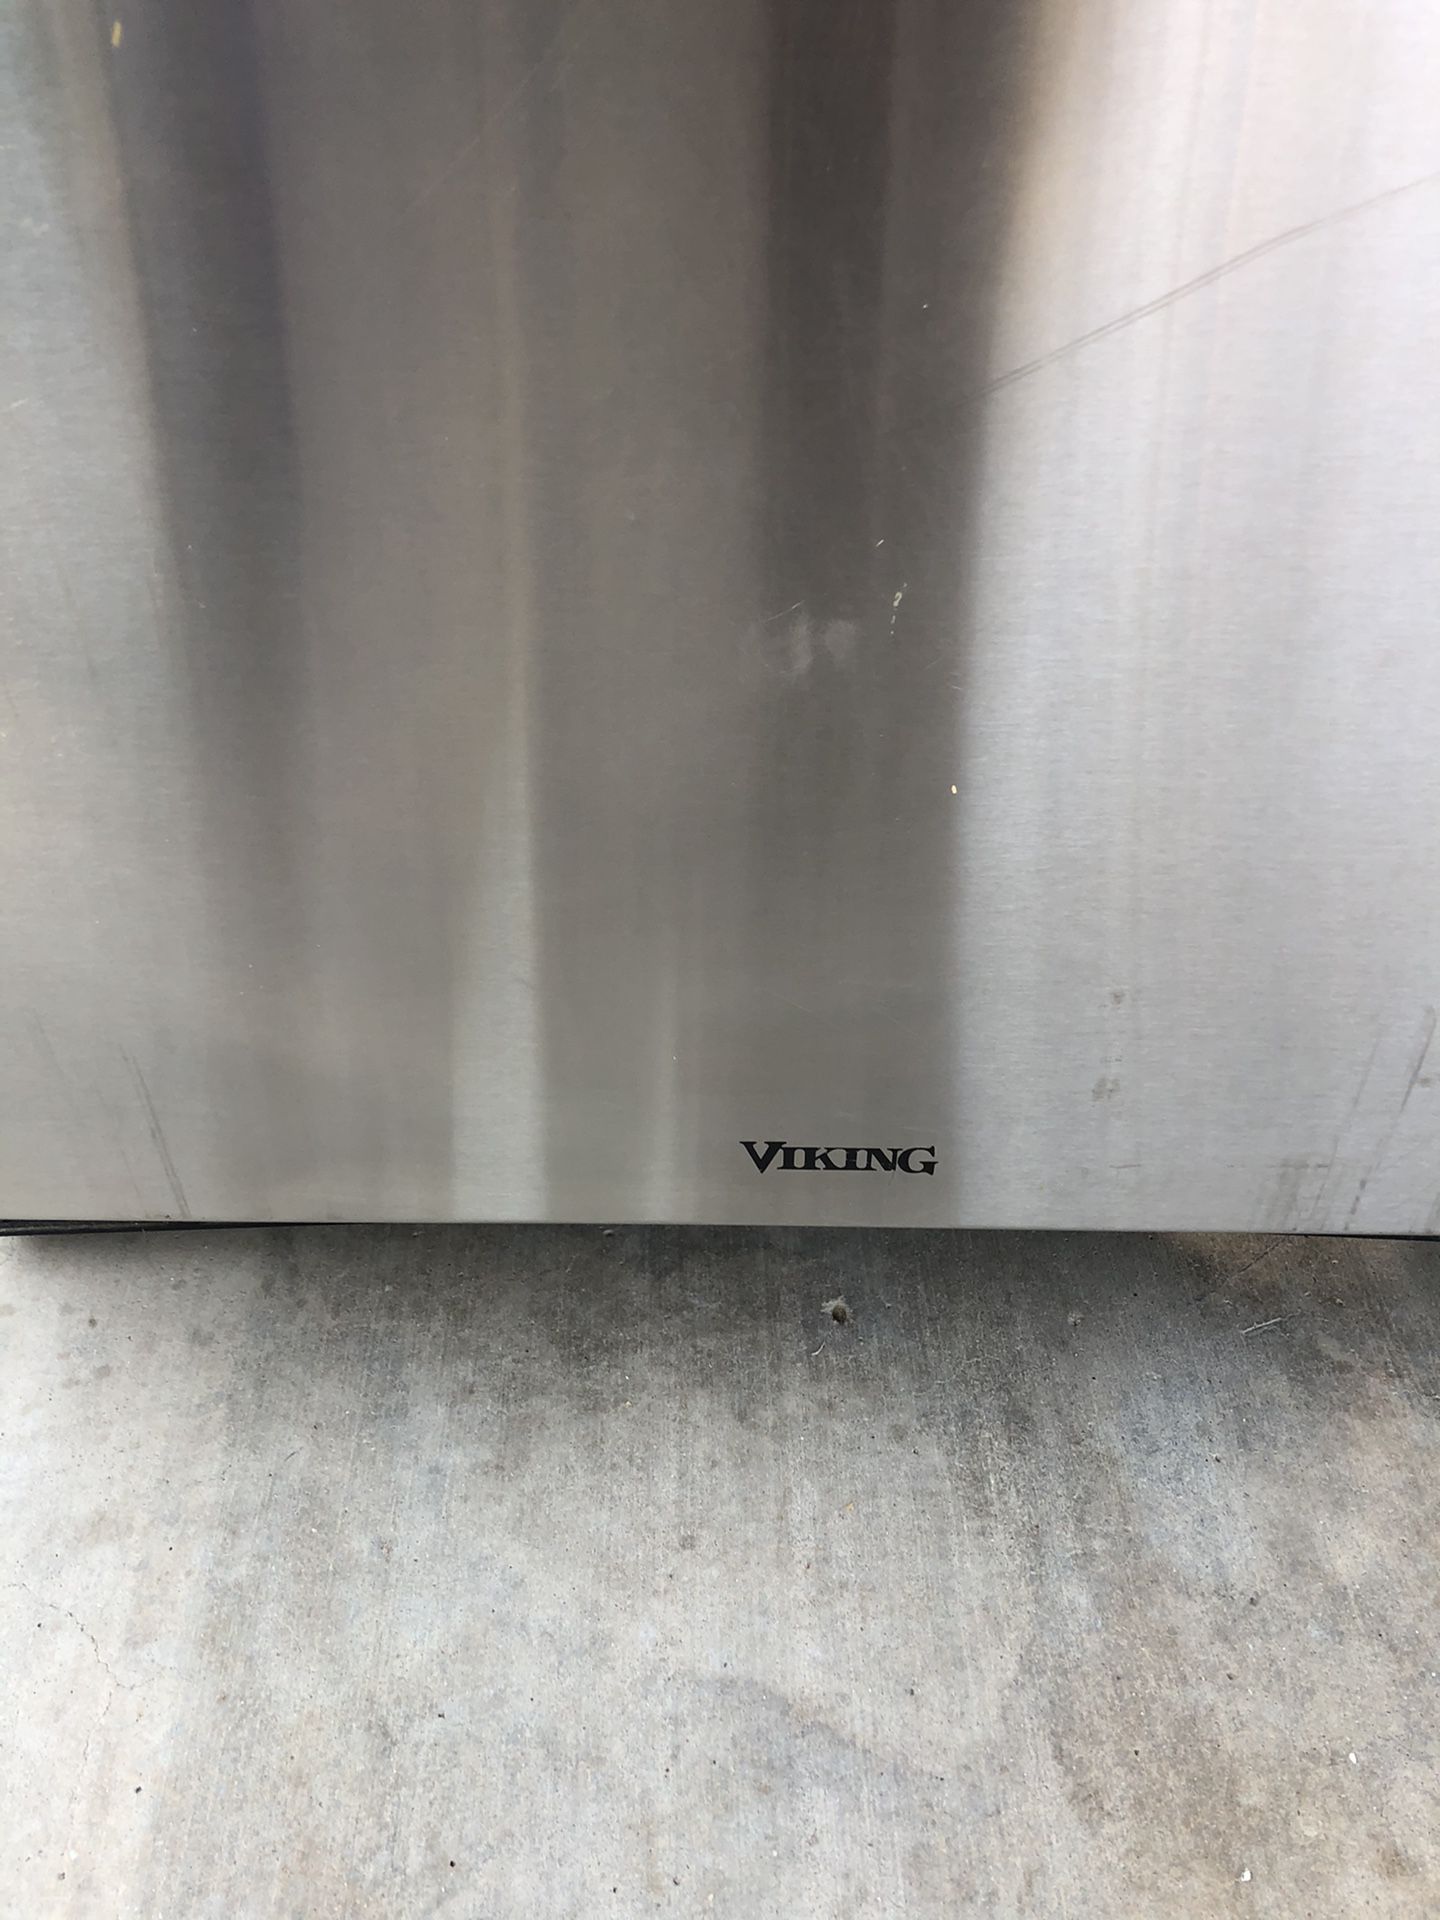 Viking fridge